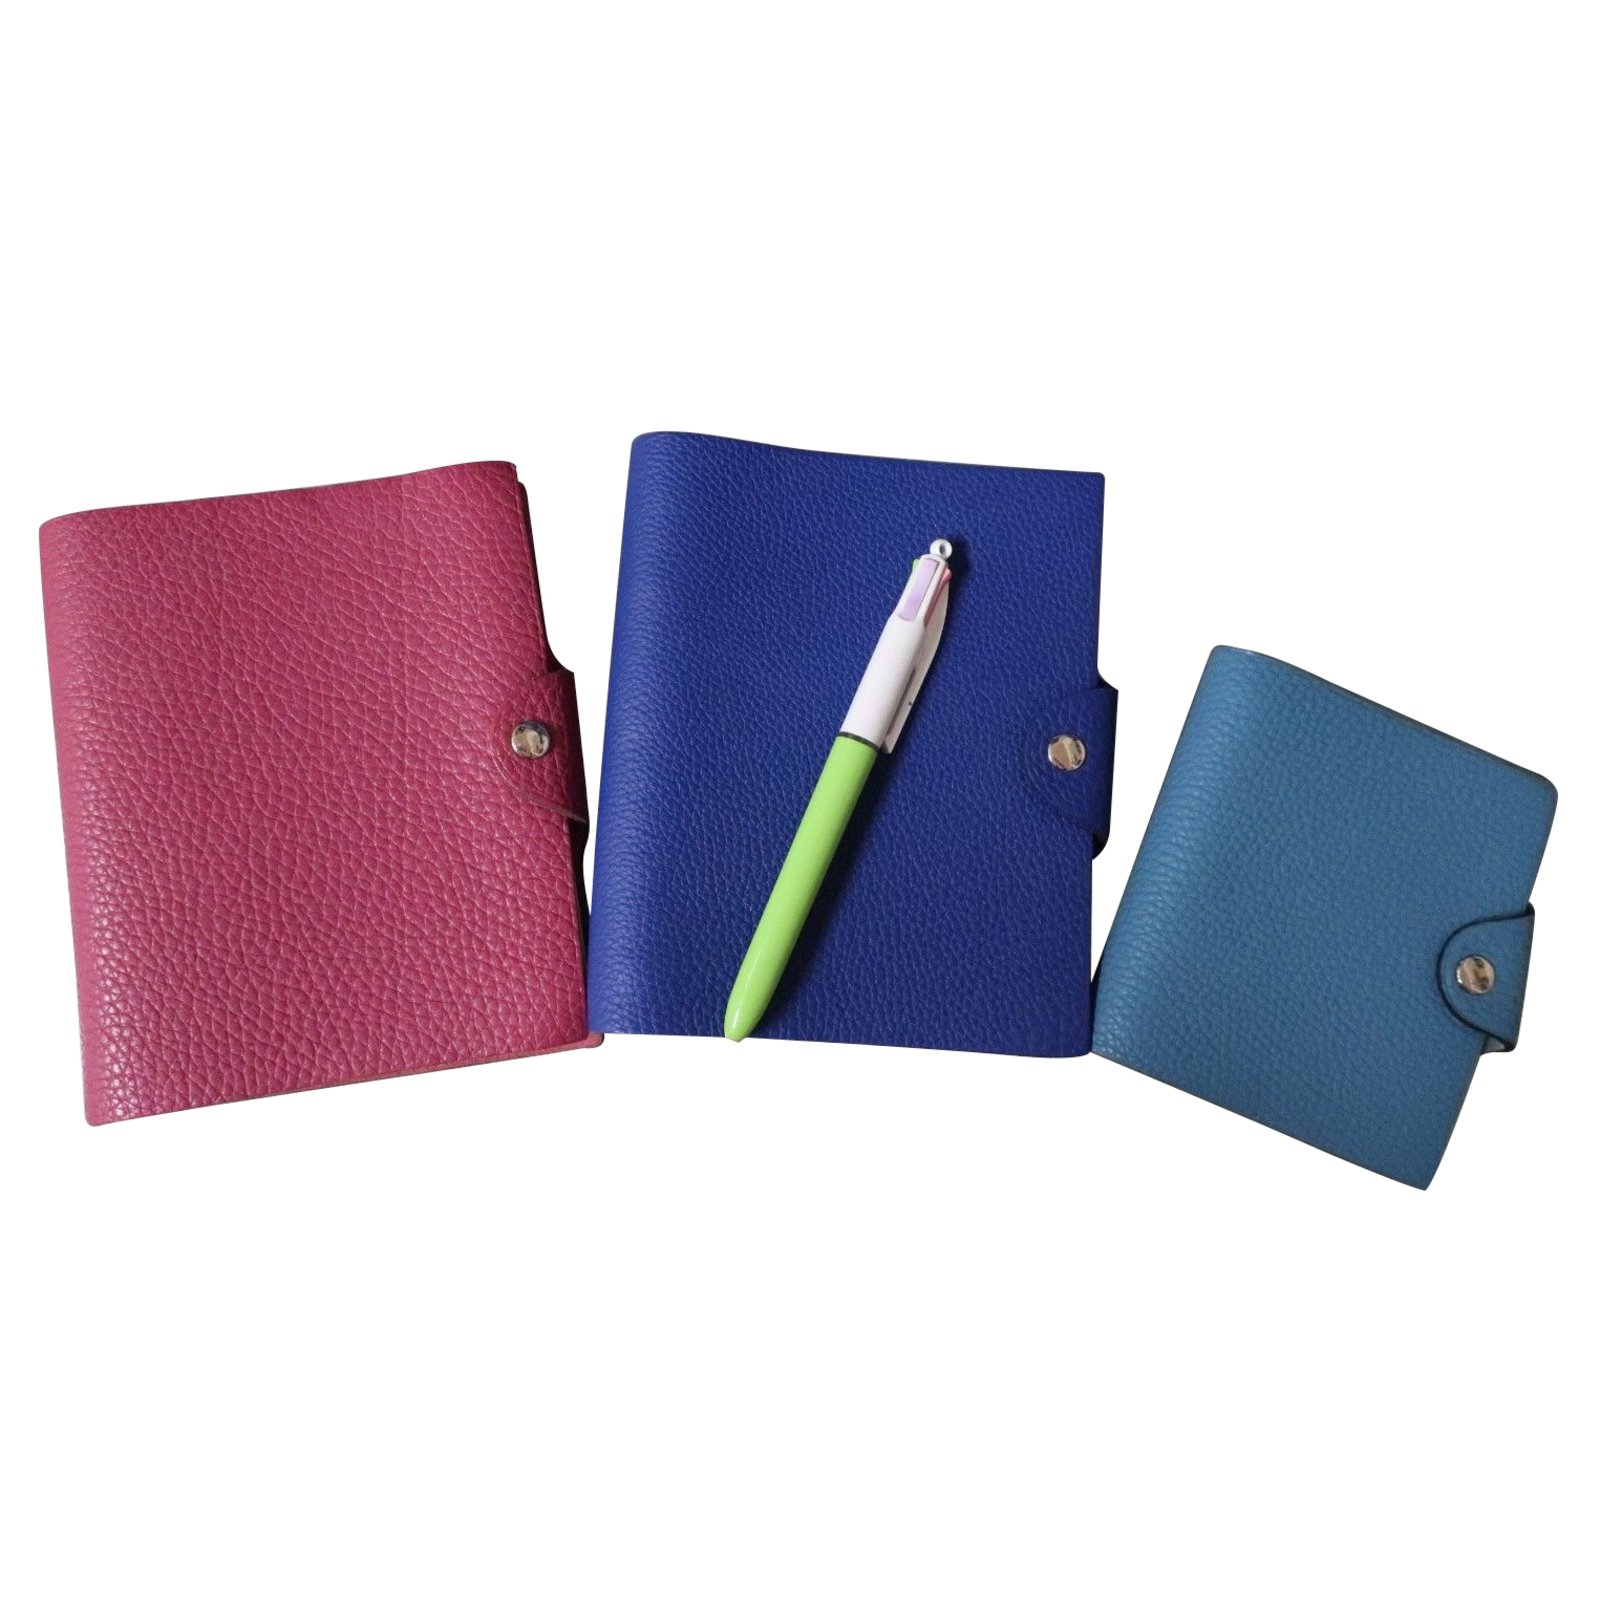 Hermès Set of 3 ulysse notebook covers 